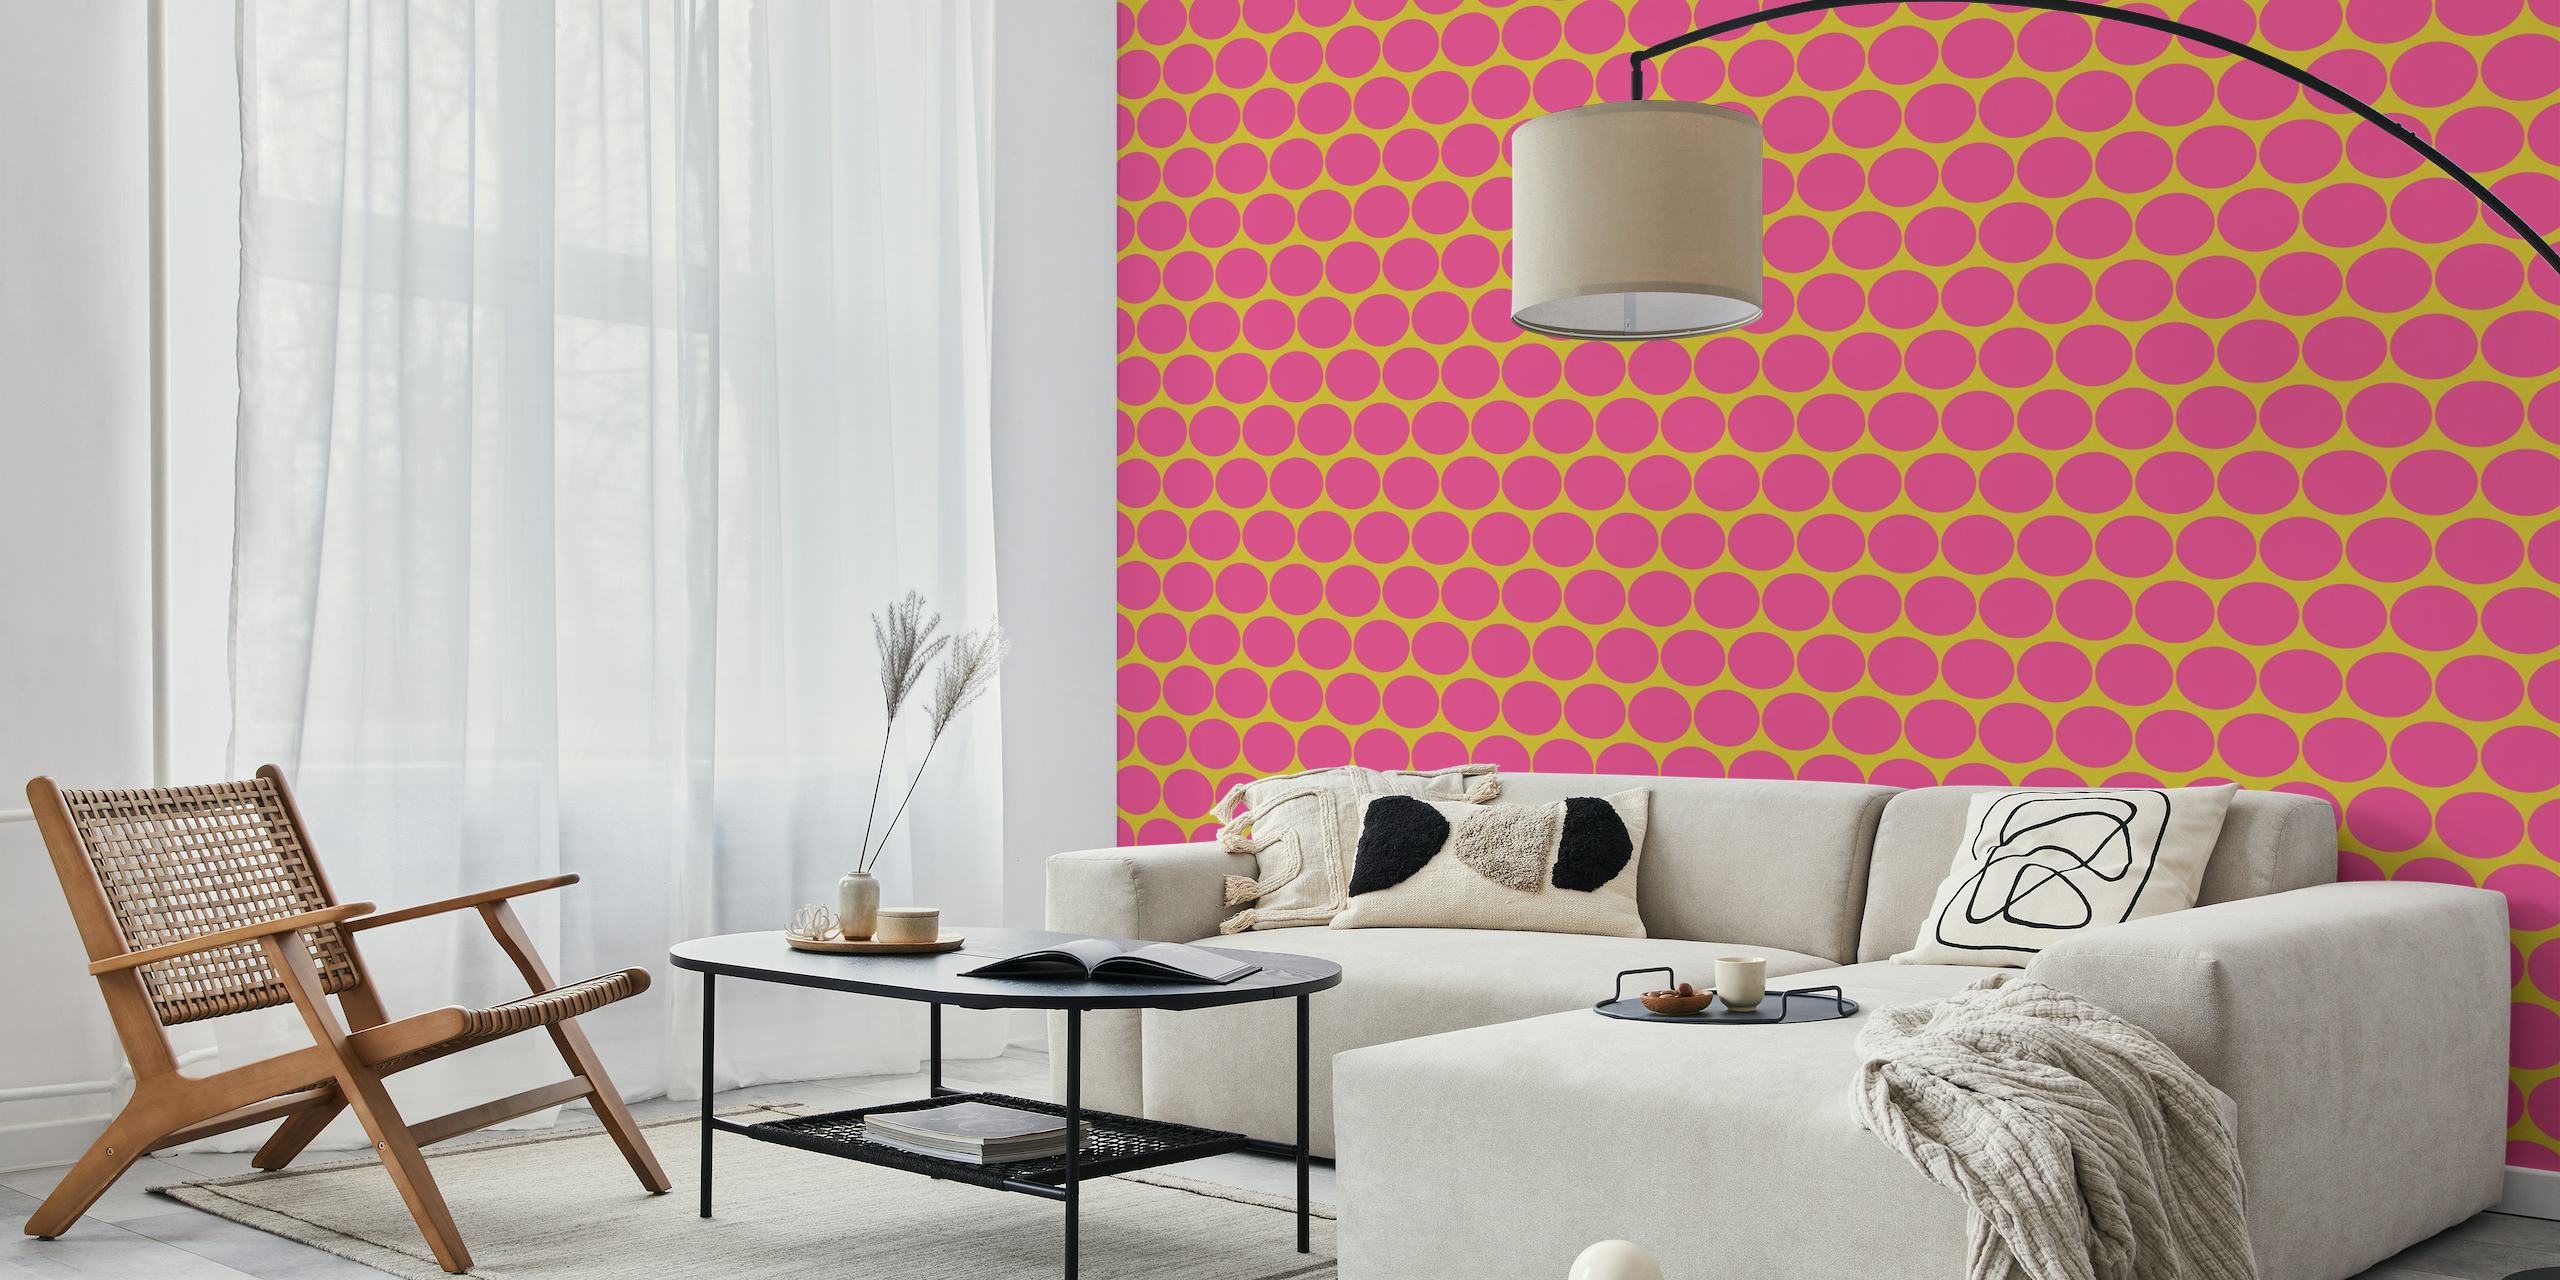 70s Big Dots - Hot Pink / Empire Yellow wallpaper